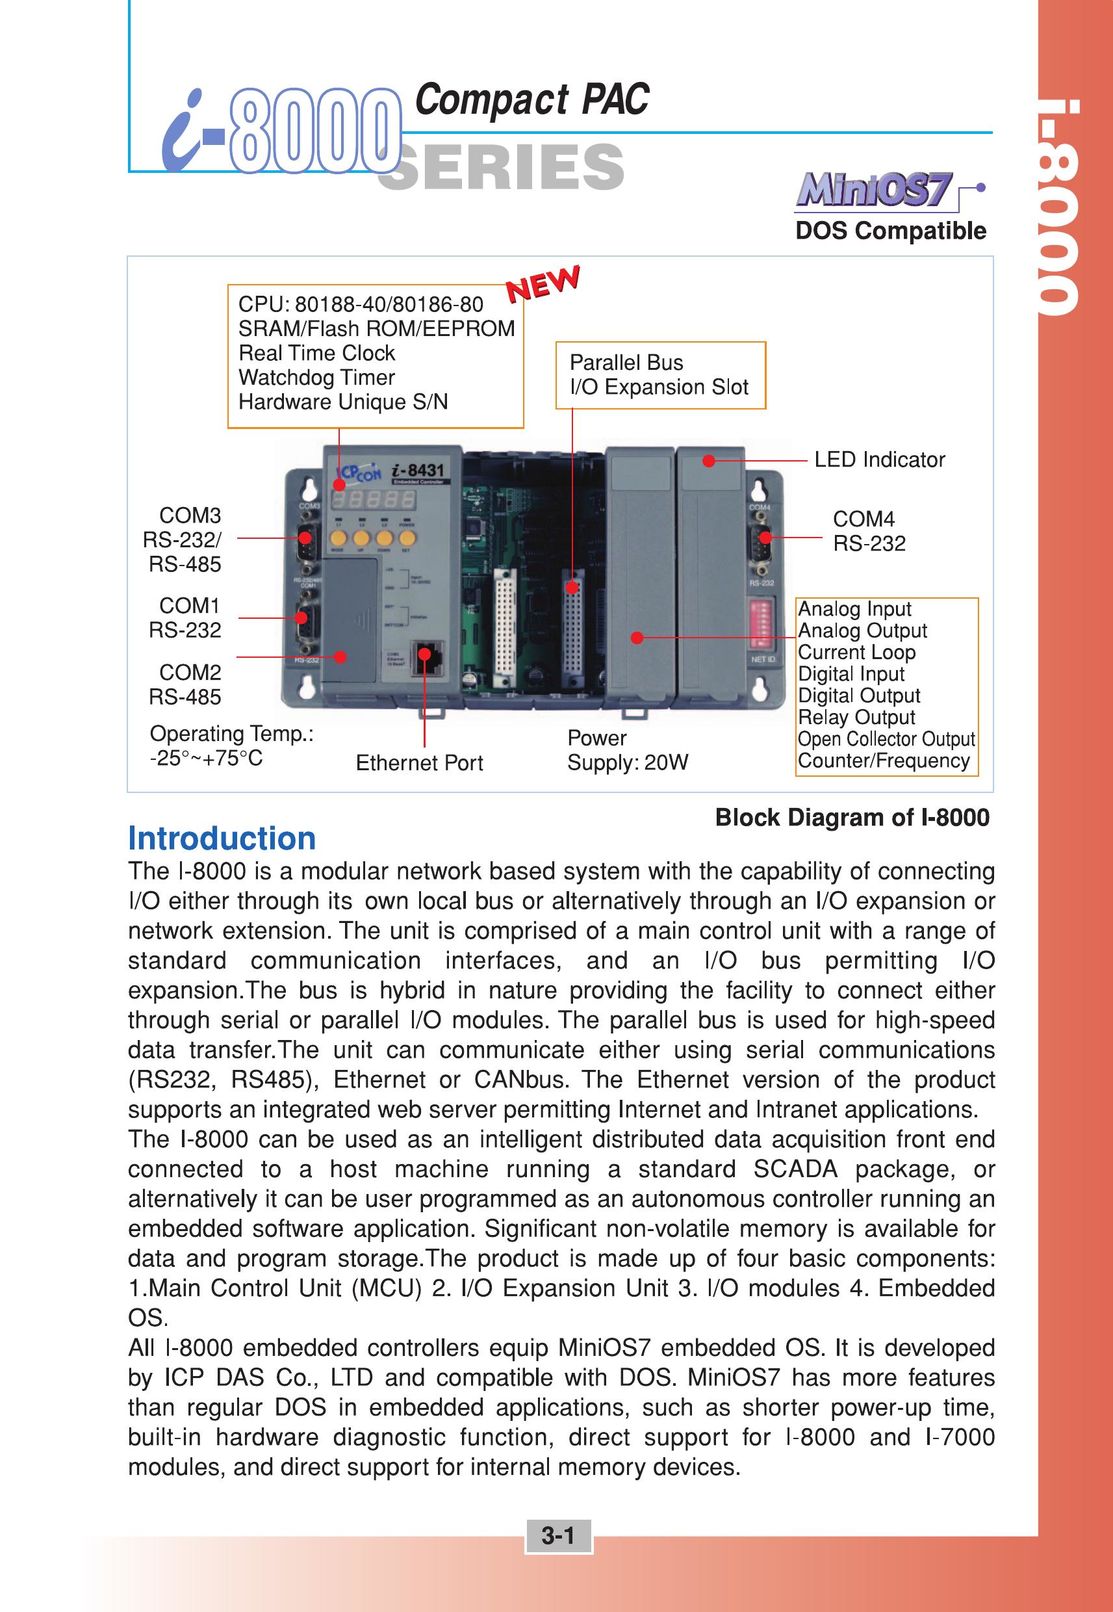 ICP DAS USA i-8000 Series Network Card User Manual